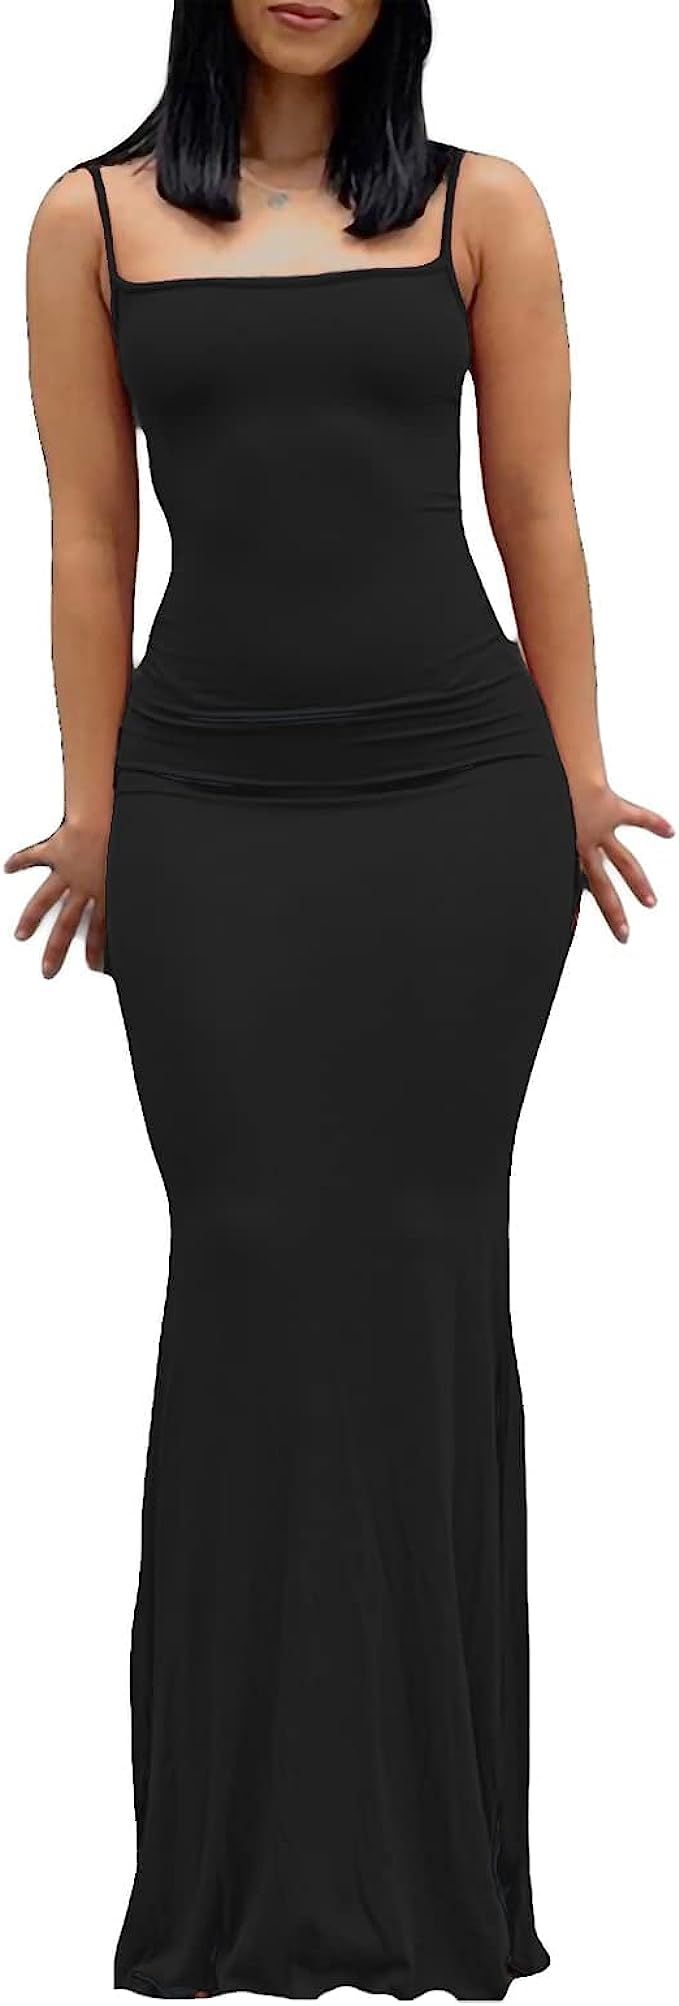 Women Spaghetti Strap Casual Maxi Dresses Sleeveless Cami Dress Party Club Bodycon Dress | Amazon (US)